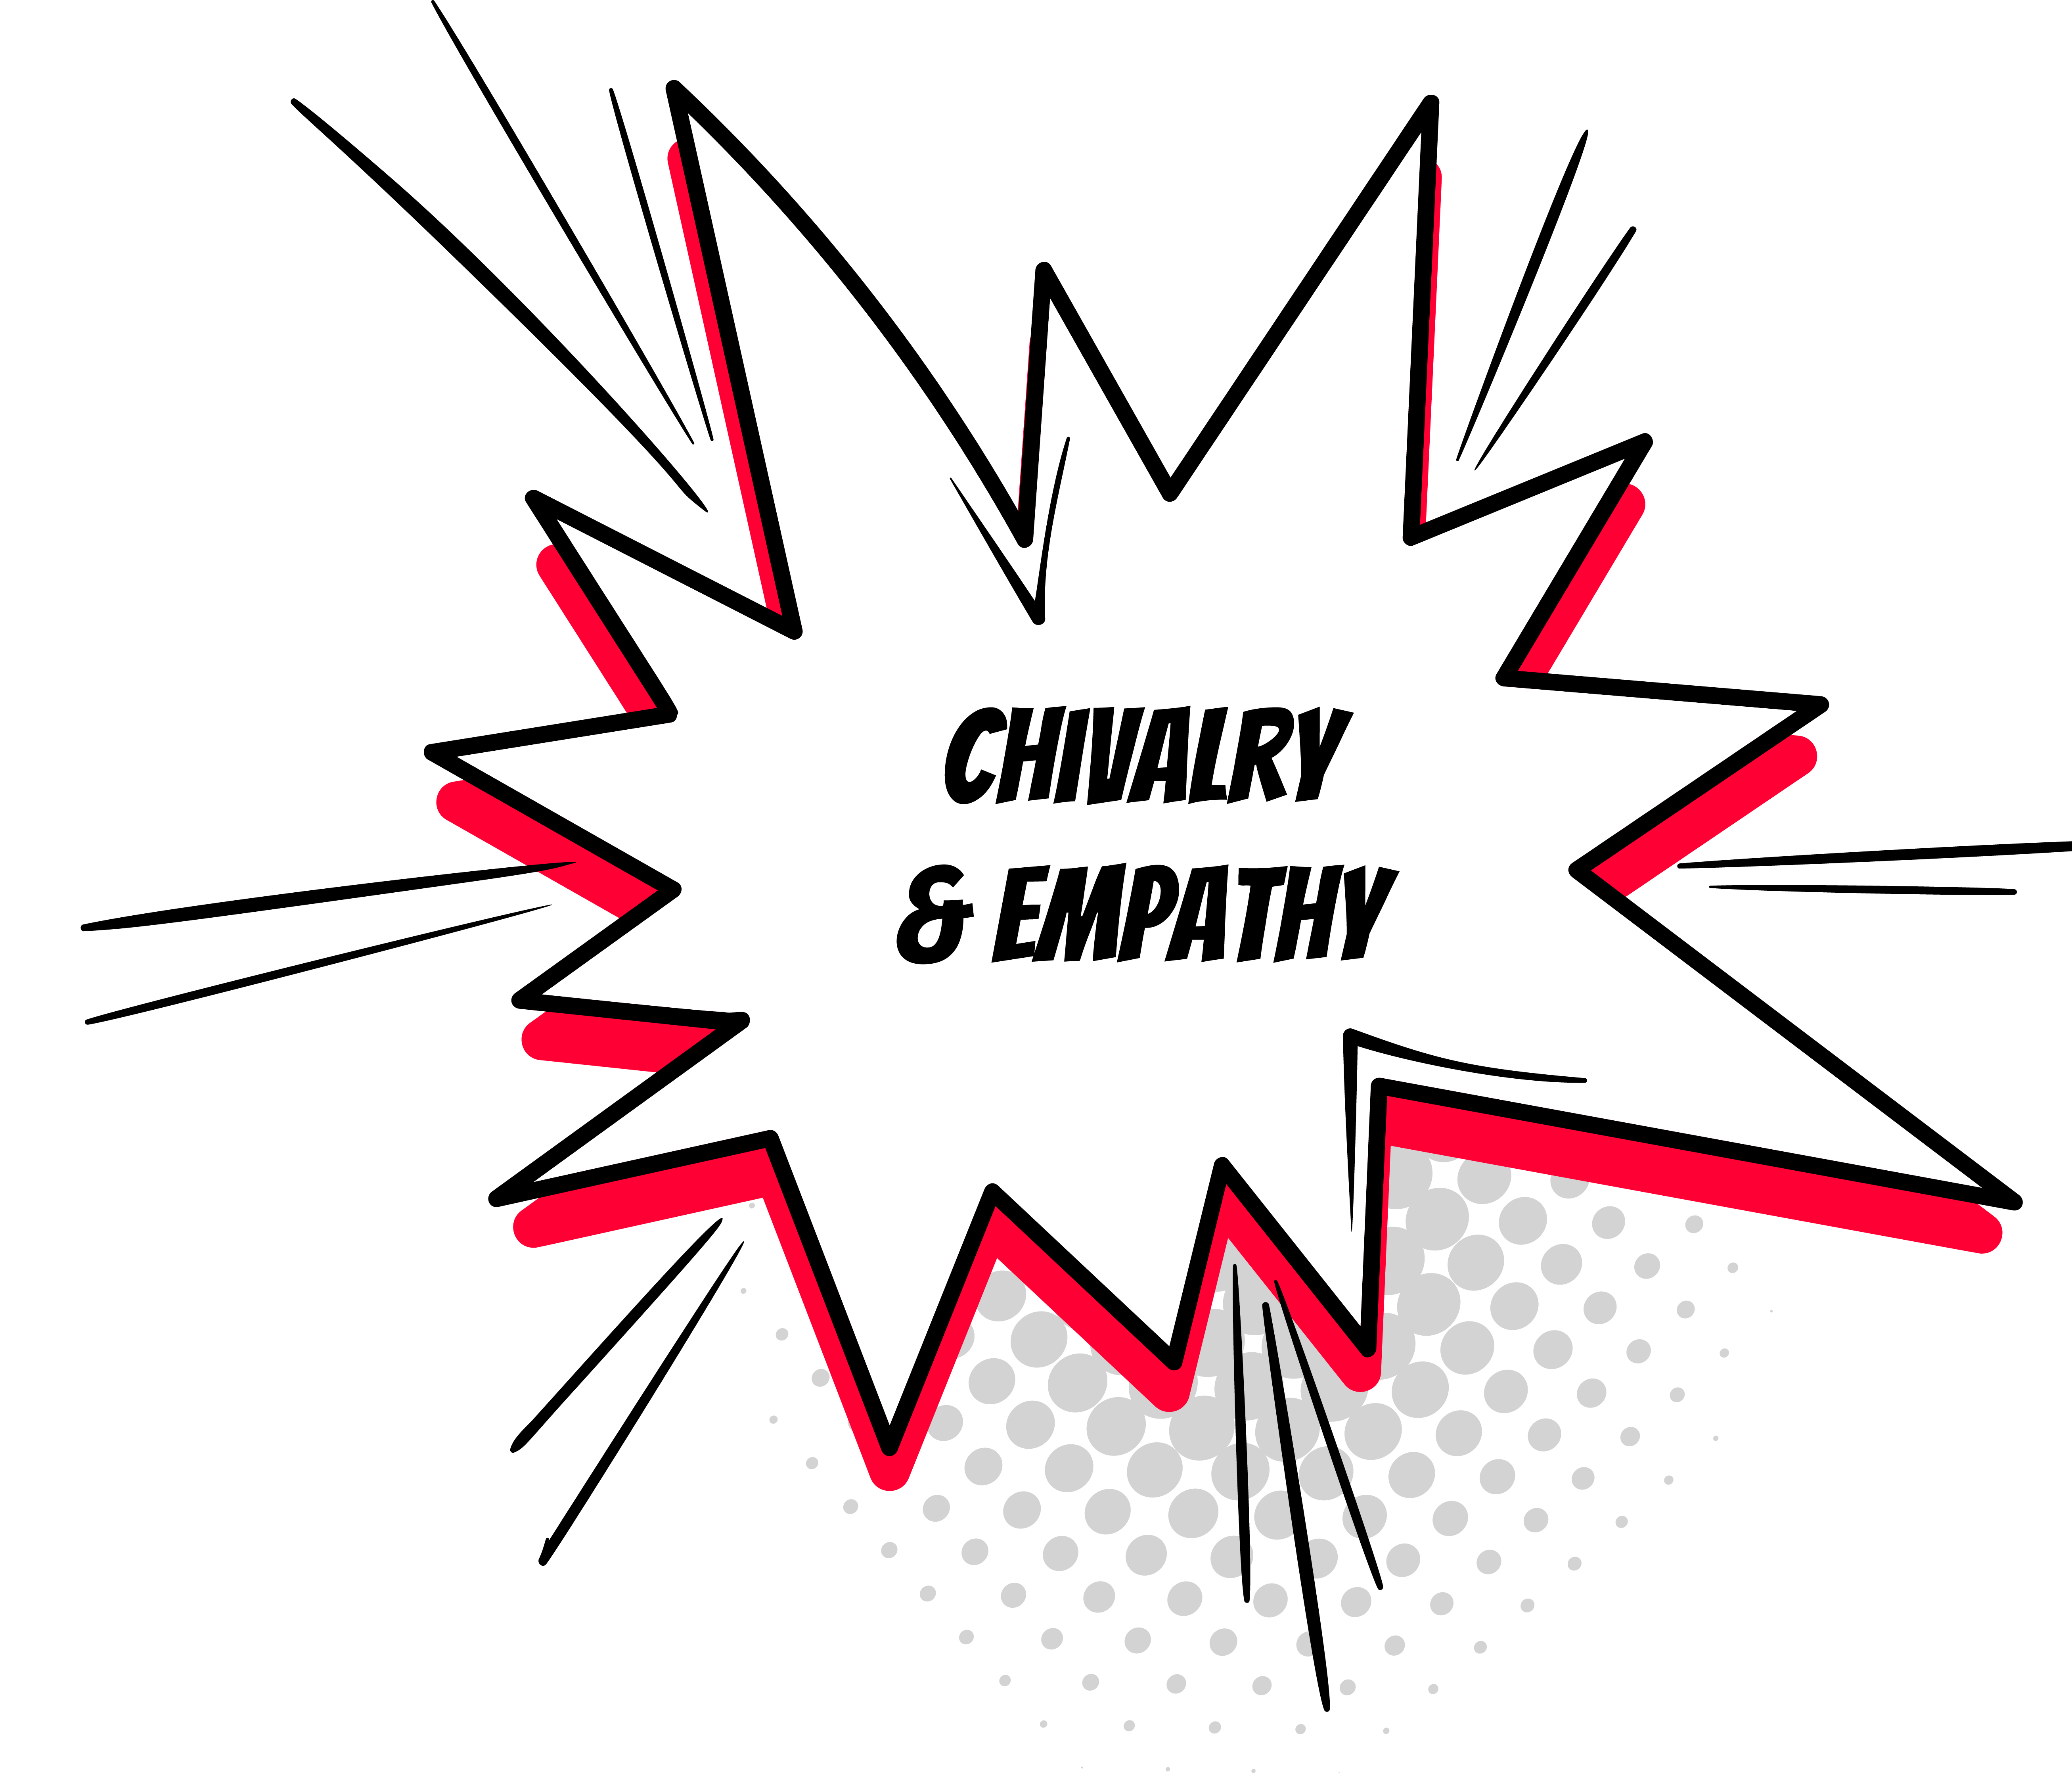 chivalry & empathy